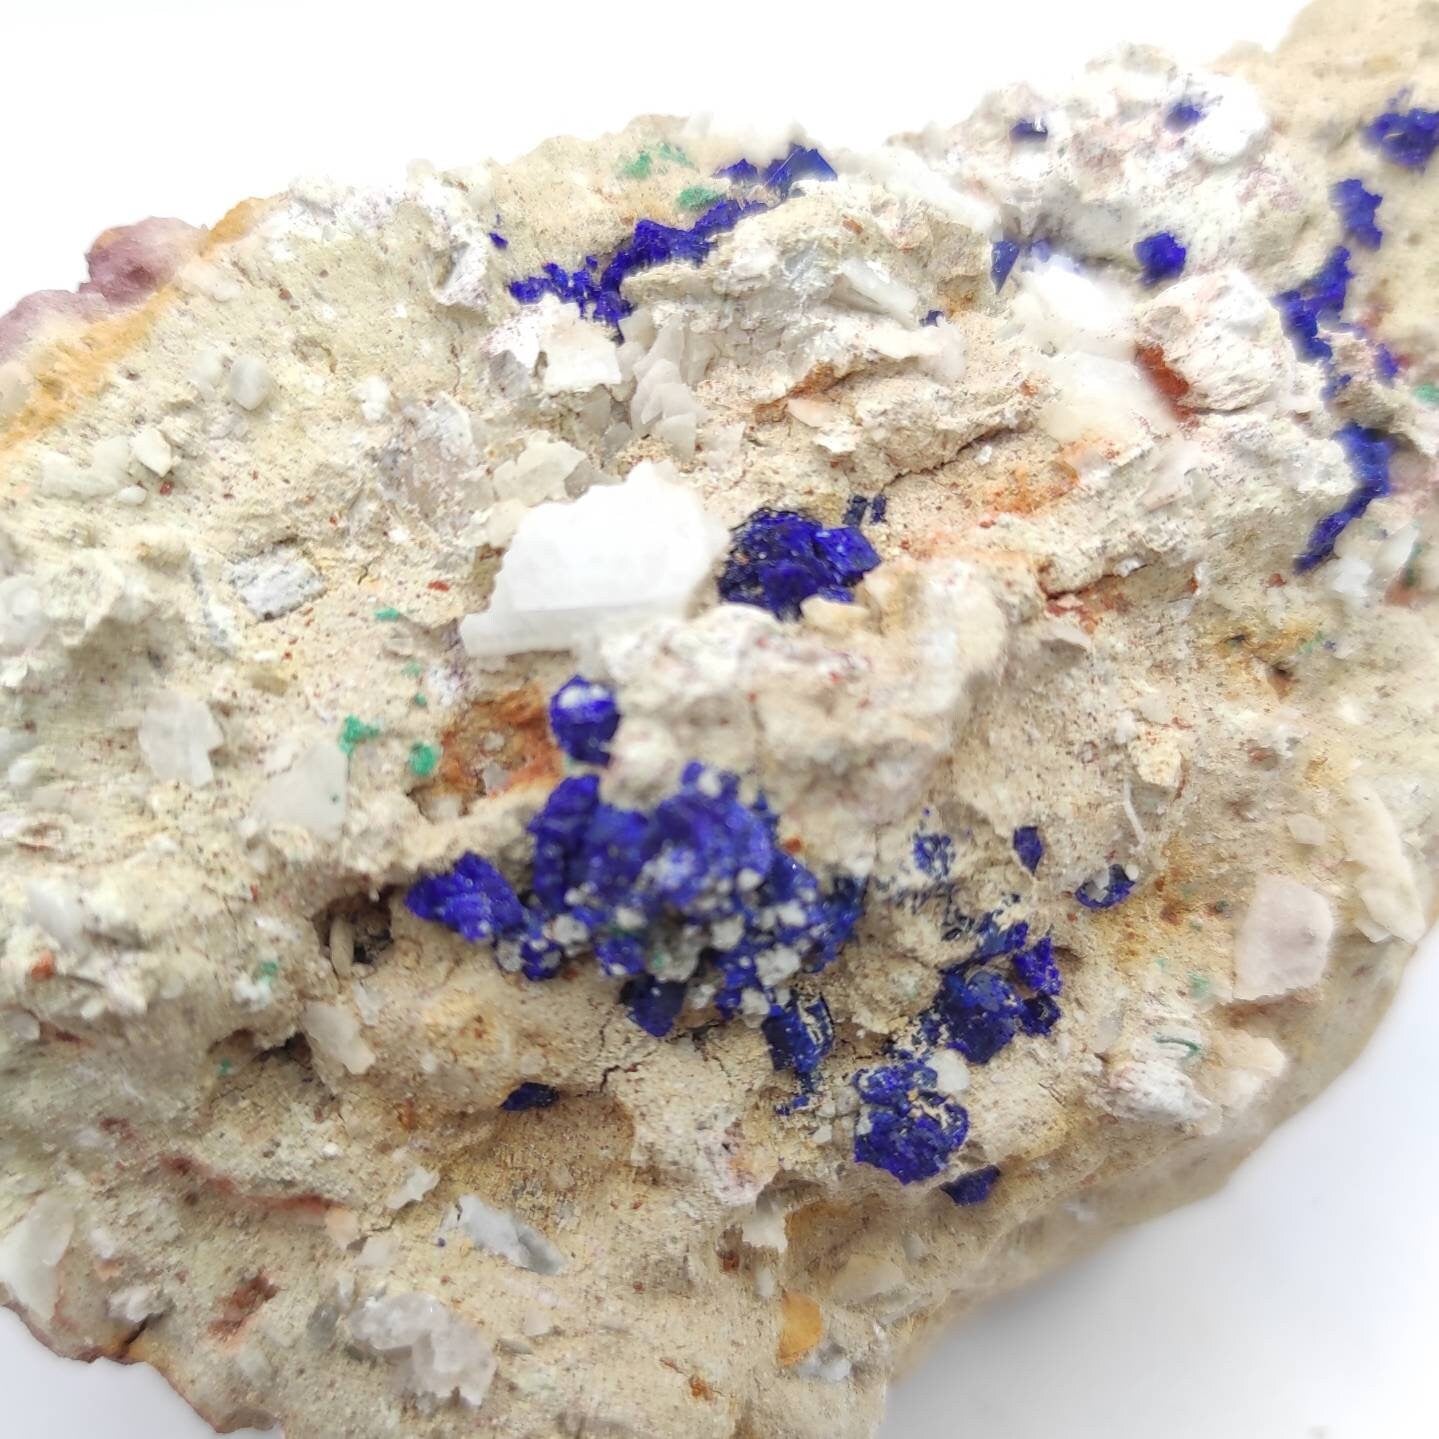 314g - Large Azurite in Matrix Crystal Specimen - Blue Azurite from Touissit, Morocco - Natural Raw Azurite Mineral - Rough Azurite